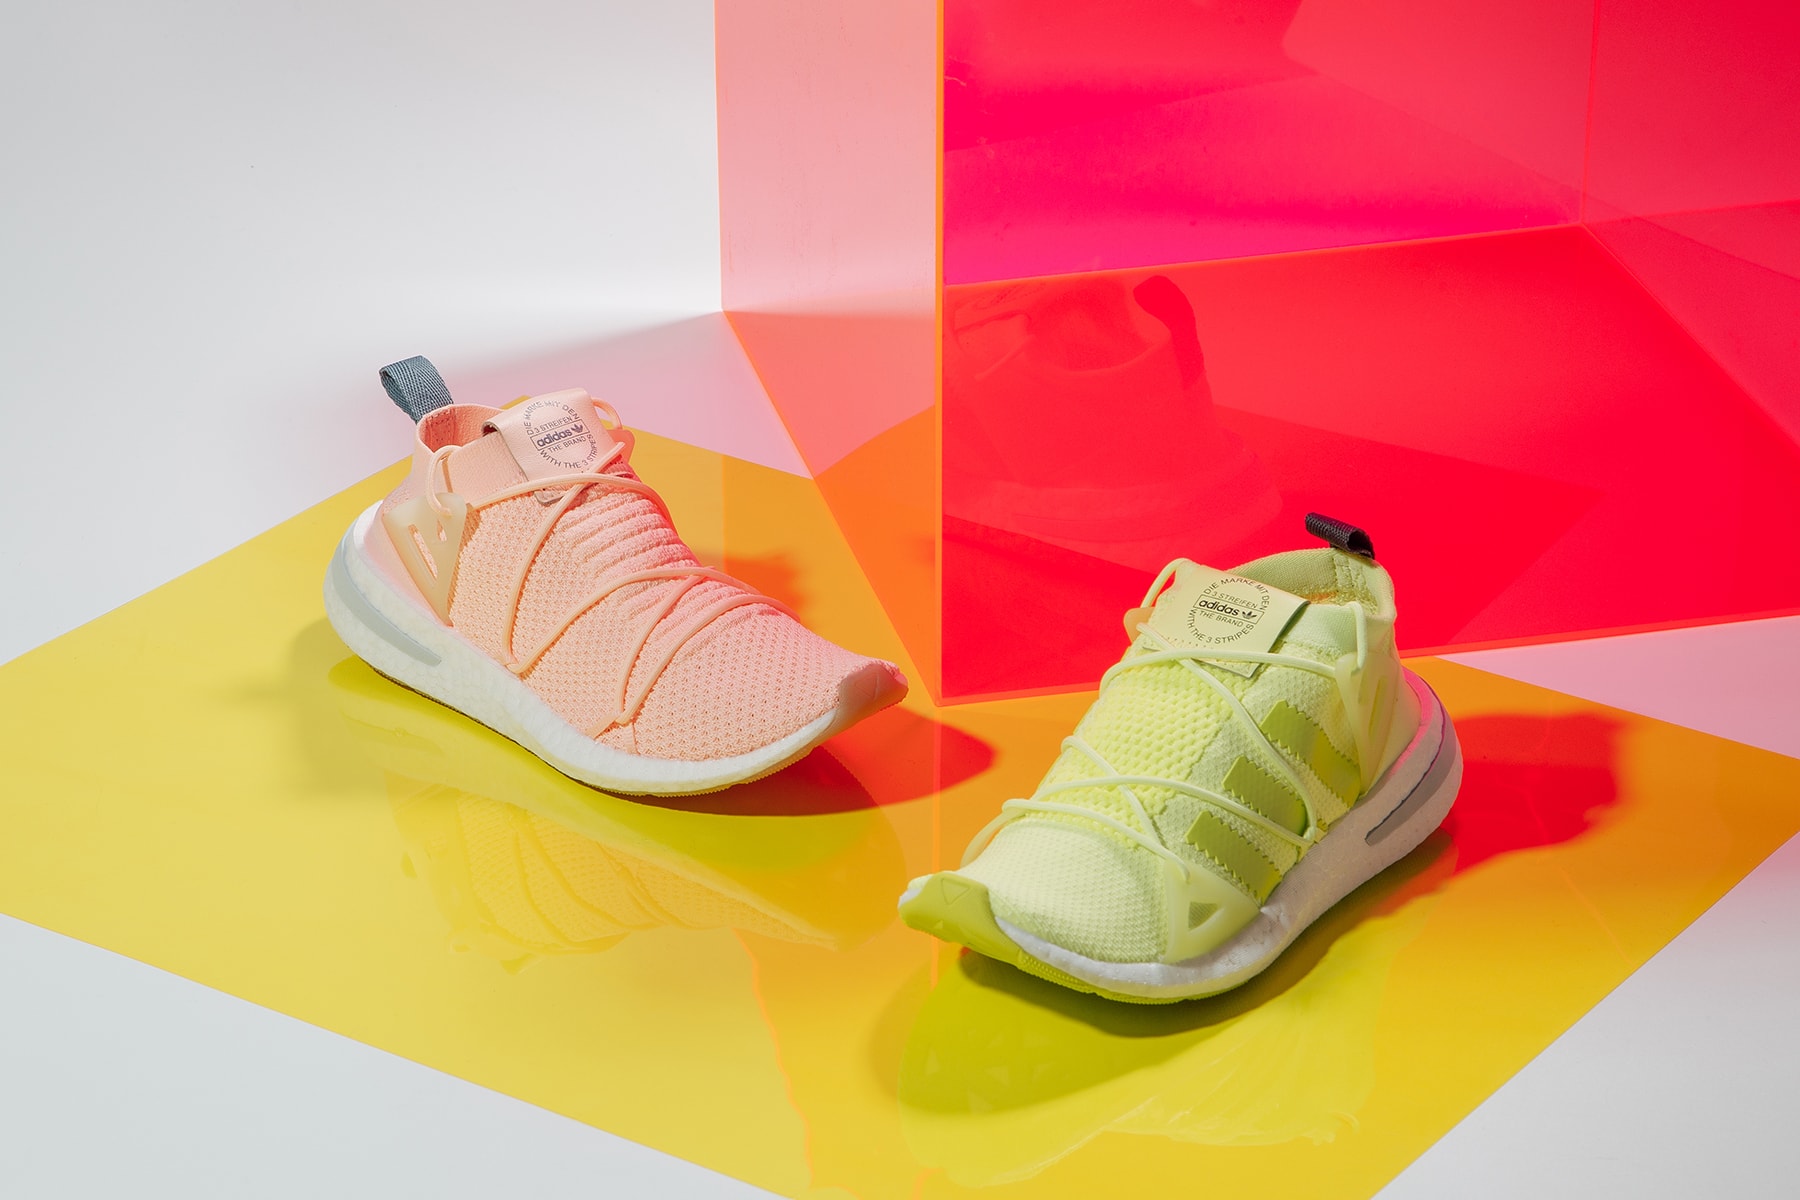 adidas originals arkyn closer look clear orange solar yellow primeknit